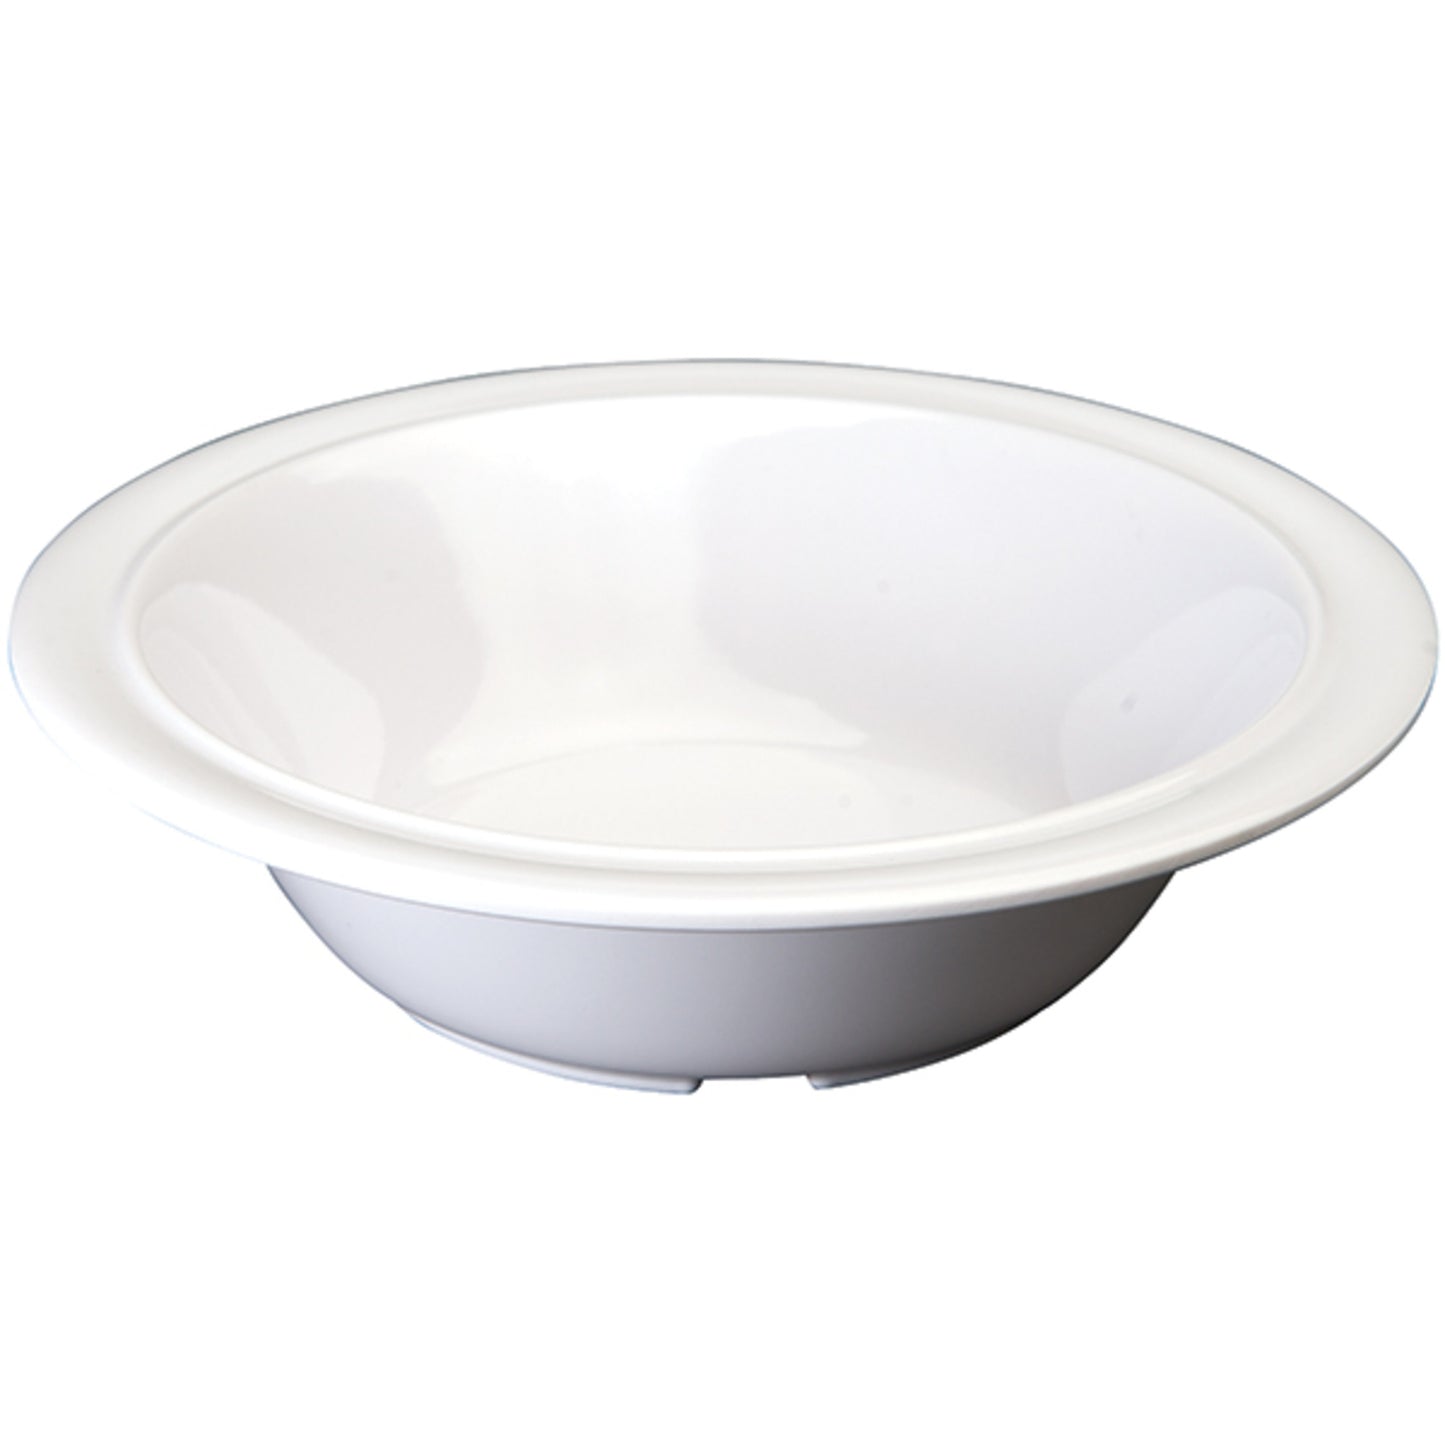 MMB-12W - Melamine 12 oz Soup/Cereal Bowls - White